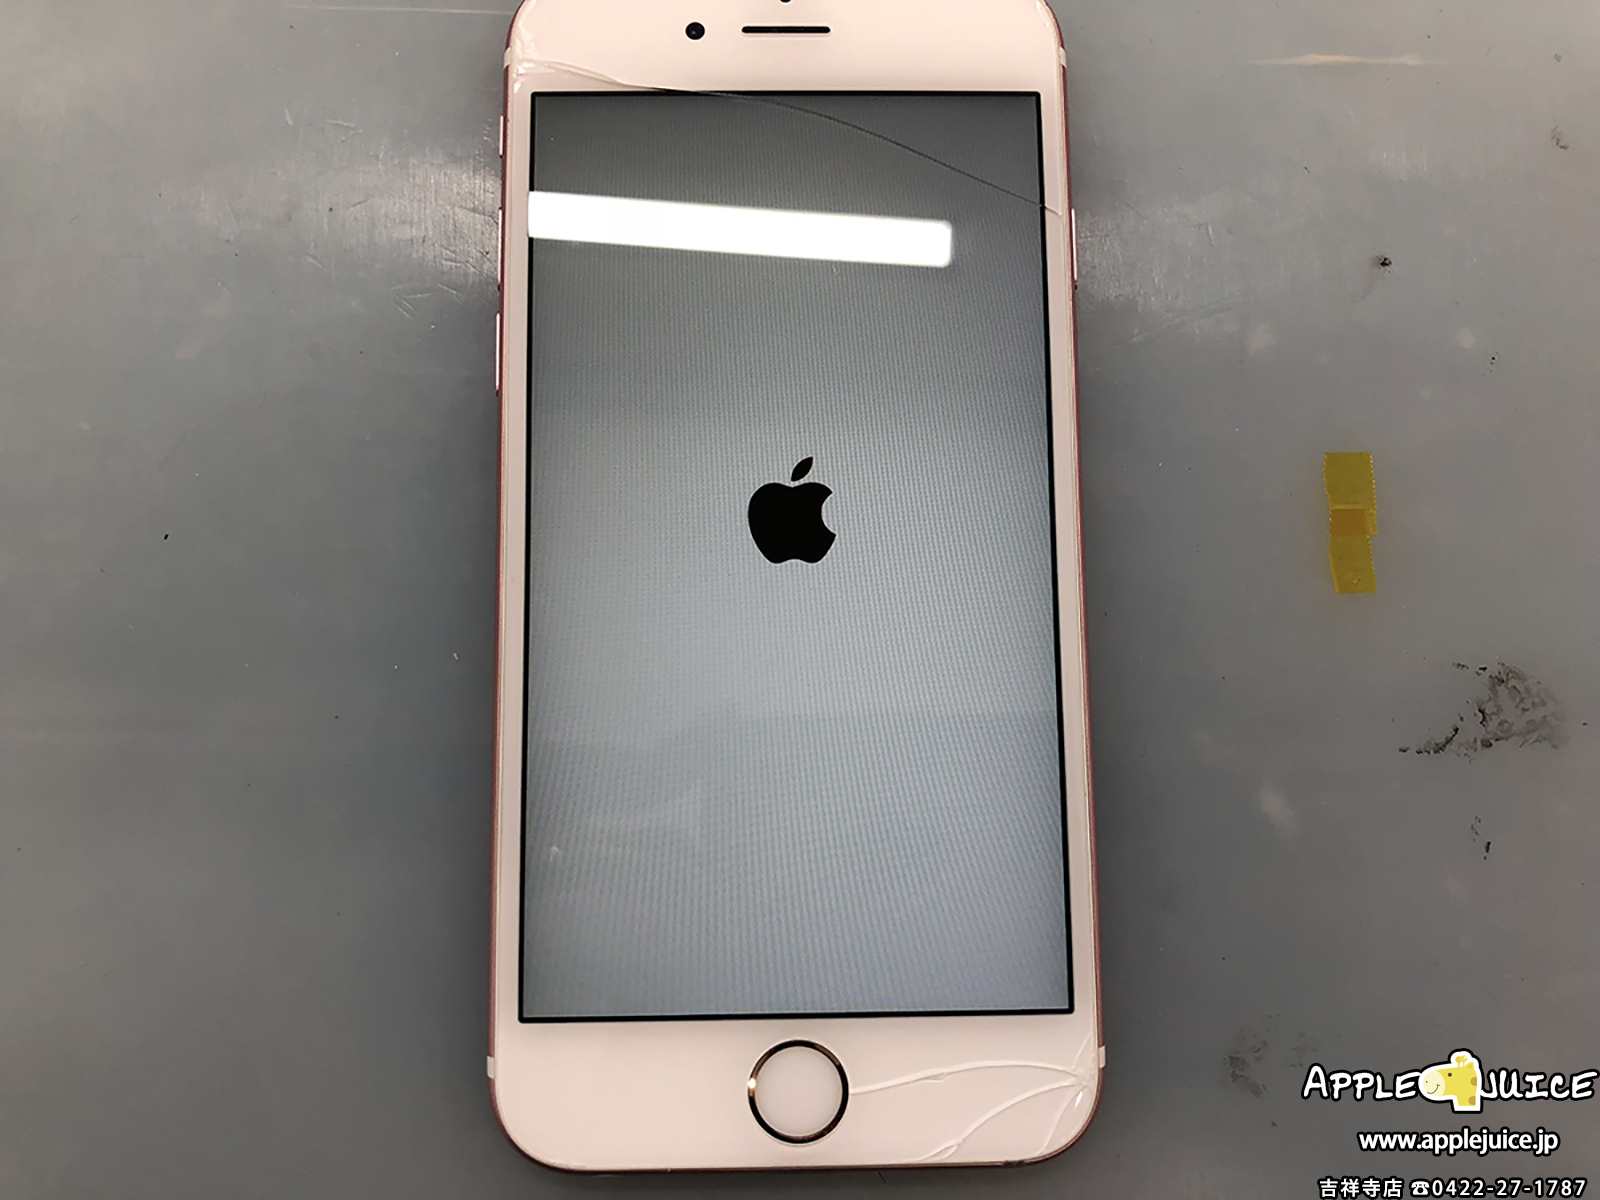 Iphone6sの自己分解バックライト損傷修理も即日で修理しております Iphone Ipad Ipod Mac修理 データ復旧 基板修理 Applejuice吉祥寺店